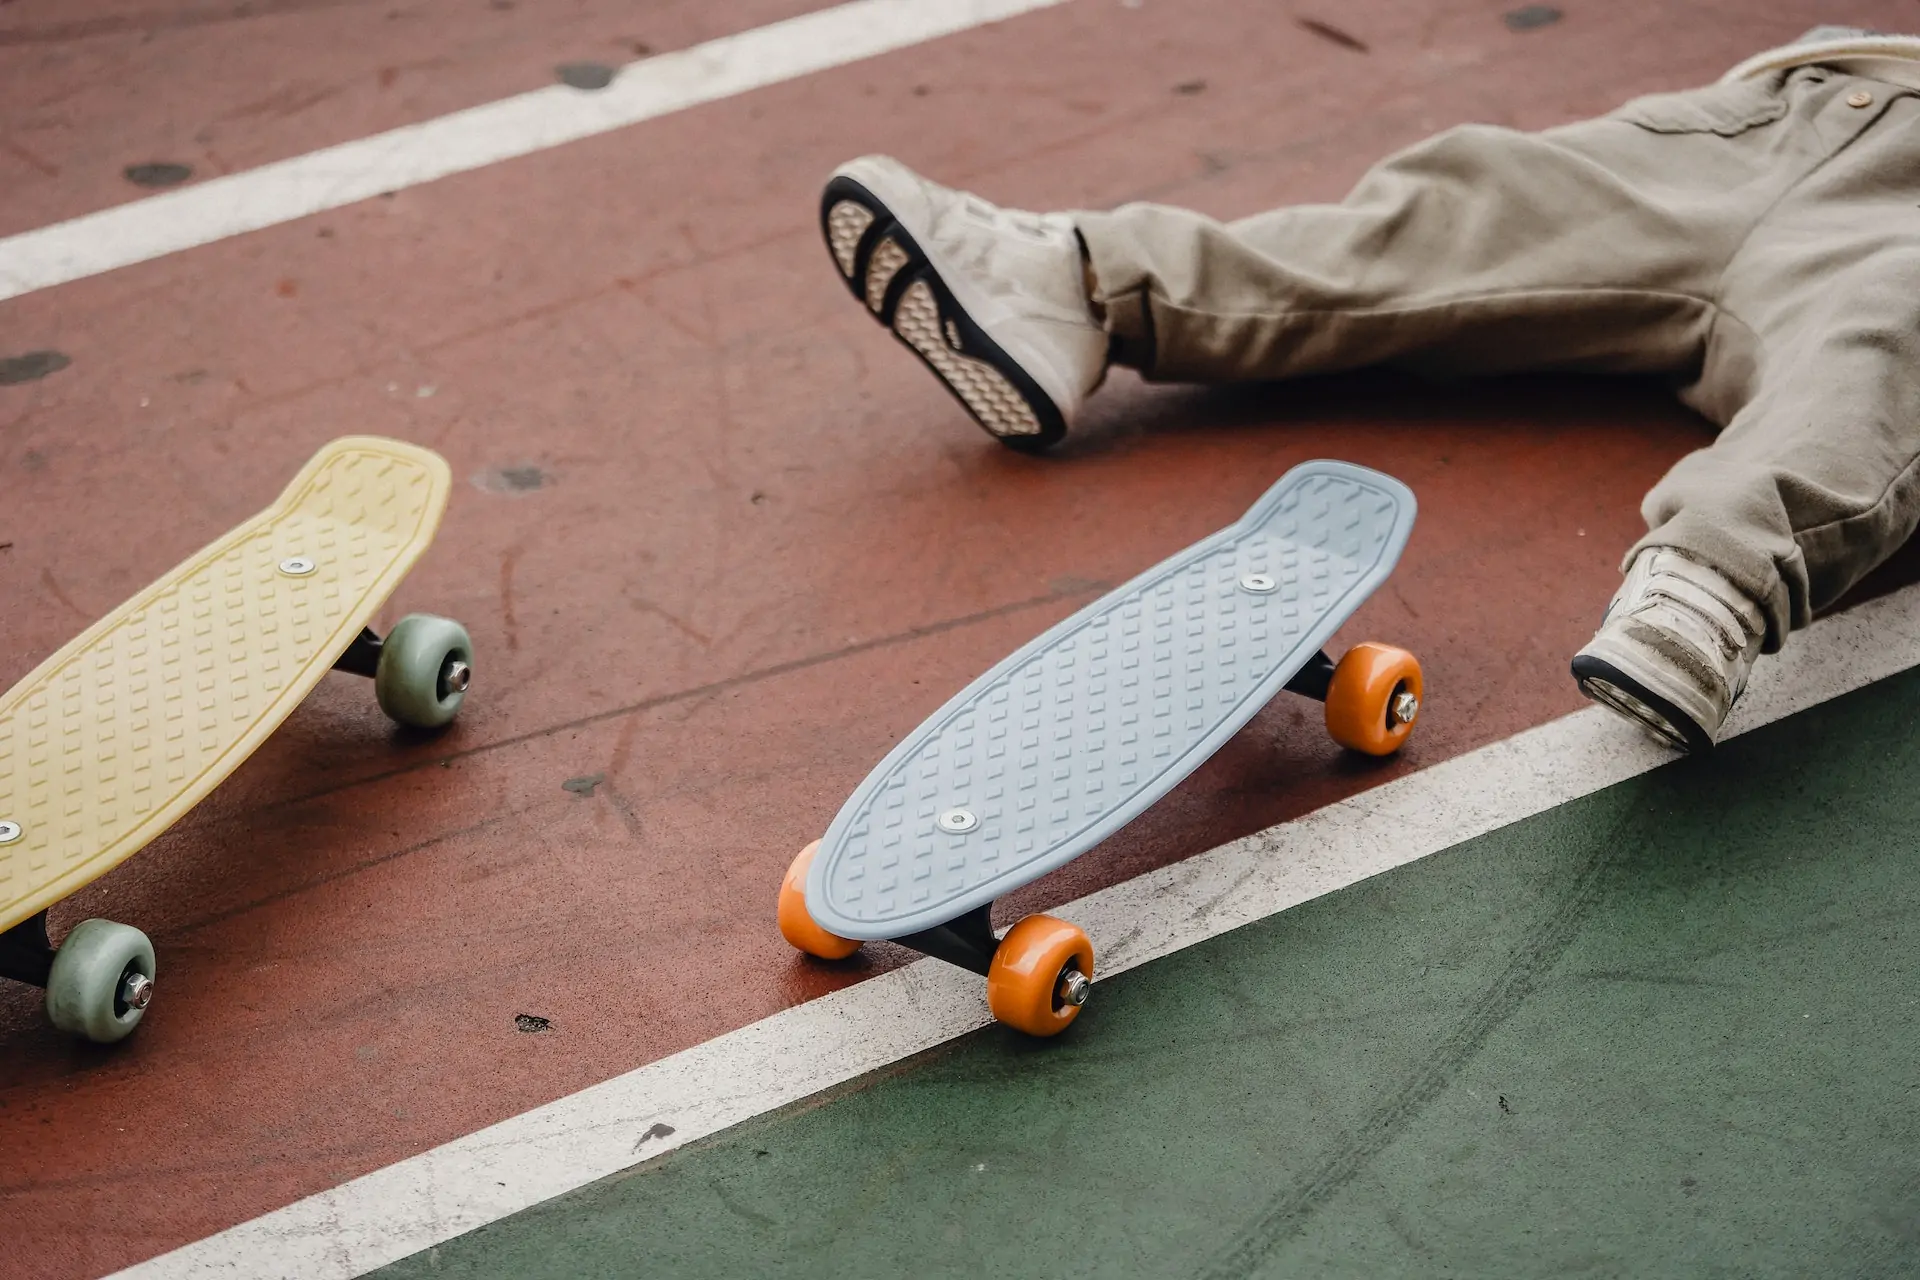 Two skateboards.